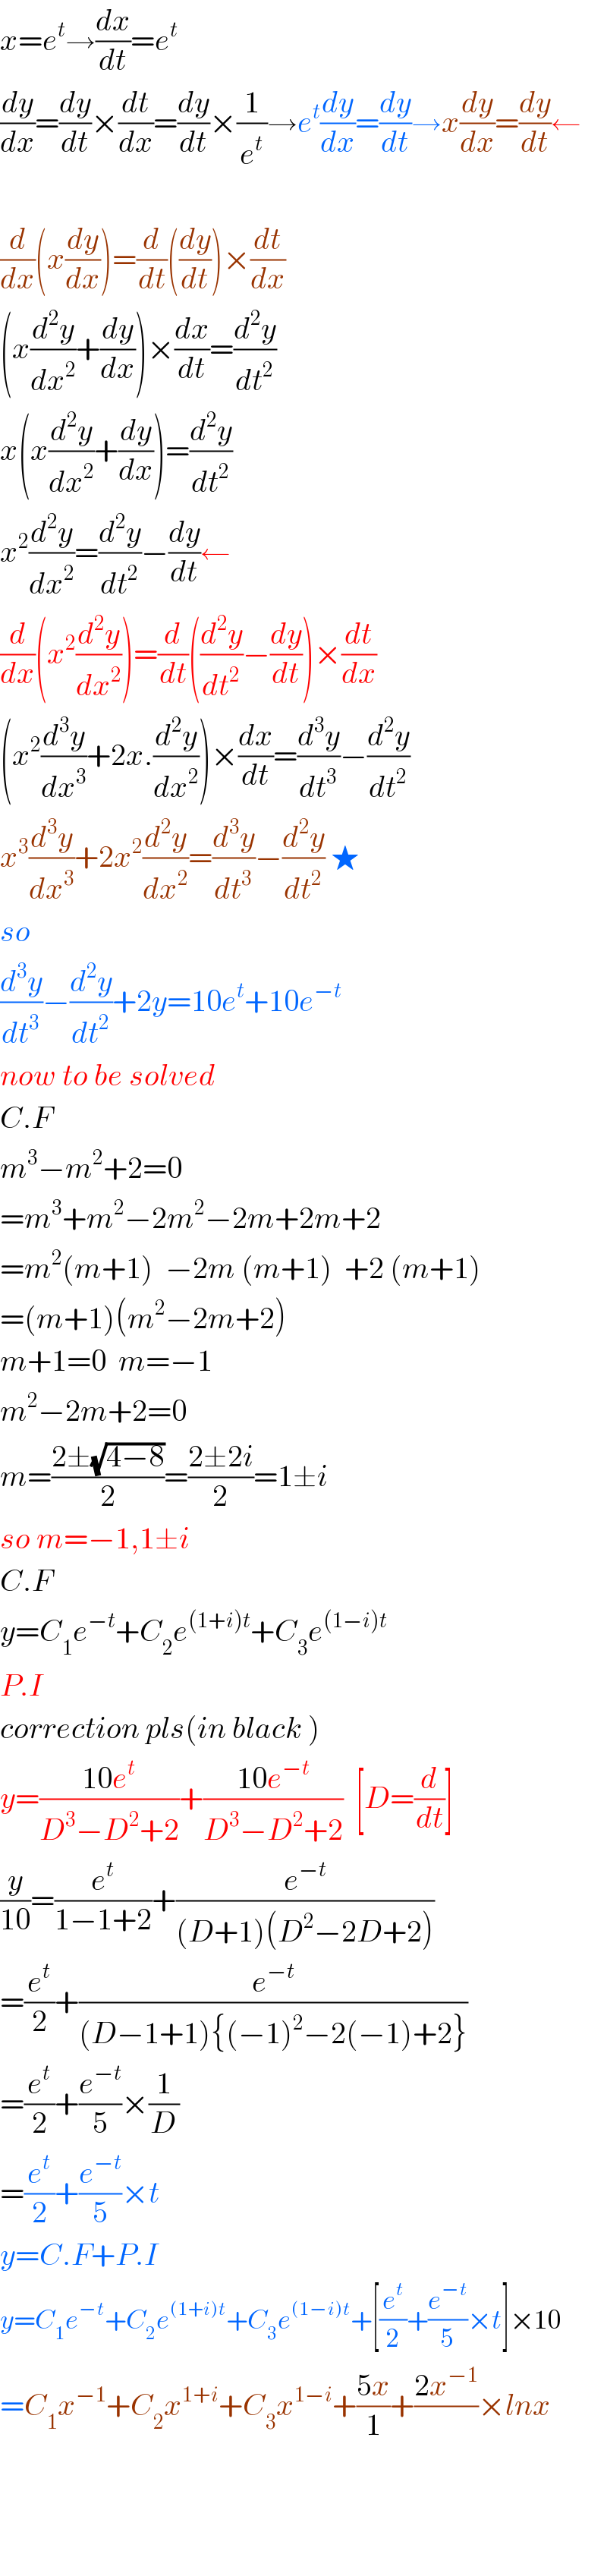 x=e^t →(dx/dt)=e^t   (dy/dx)=(dy/dt)×(dt/dx)=(dy/dt)×(1/e^t )→e^t (dy/dx)=(dy/dt)→x(dy/dx)=(dy/dt)←    (d/dx)(x(dy/dx))=(d/dt)((dy/dt))×(dt/dx)  (x(d^2 y/dx^2 )+(dy/dx))×(dx/dt)=(d^2 y/dt^2 )  x(x(d^2 y/dx^2 )+(dy/dx))=(d^2 y/dt^2 )  x^2 (d^2 y/dx^2 )=(d^2 y/dt^2 )−(dy/dt)←  (d/dx)(x^2 (d^2 y/dx^2 ))=(d/dt)((d^2 y/dt^2 )−(dy/dt))×(dt/dx)  (x^2 (d^3 y/dx^3 )+2x.(d^2 y/dx^2 ))×(dx/dt)=(d^3 y/dt^3 )−(d^2 y/dt^2 )  x^3 (d^3 y/dx^3 )+2x^2 (d^2 y/dx^2 )=(d^3 y/dt^3 )−(d^2 y/dt^2 ) ★  so  (d^3 y/dt^3 )−(d^2 y/dt^2 )+2y=10e^t +10e^(−t)   now to be solved  C.F  m^3 −m^2 +2=0  =m^3 +m^2 −2m^2 −2m+2m+2  =m^2 (m+1)  −2m (m+1)  +2 (m+1)  =(m+1)(m^2 −2m+2)  m+1=0  m=−1  m^2 −2m+2=0  m=((2±(√(4−8)))/2)=((2±2i)/2)=1±i  so m=−1,1±i  C.F  y=C_1 e^(−t) +C_2 e^((1+i)t) +C_3 e^((1−i)t)   P.I  correction pls(in black )  y=((10e^t )/(D^3 −D^2 +2))+((10e^(−t) )/(D^3 −D^2 +2))  [D=(d/dt)]  (y/(10))=(e^t /(1−1+2))+(e^(−t) /((D+1)(D^2 −2D+2)))  =(e^t /2)+(e^(−t) /((D−1+1){(−1)^2 −2(−1)+2}))  =(e^t /2)+(e^(−t) /5)×(1/D)  =(e^t /2)+(e^(−t) /5)×t  y=C.F+P.I  y=C_1 e^(−t) +C_2 e^((1+i)t) +C_3 e^((1−i)t) +[(e^t /2)+(e^(−t) /5)×t]×10  =C_1 x^(−1) +C_2 x^(1+i) +C_3 x^(1−i) +((5x)/1)+((2x^(−1) )/)×lnx        